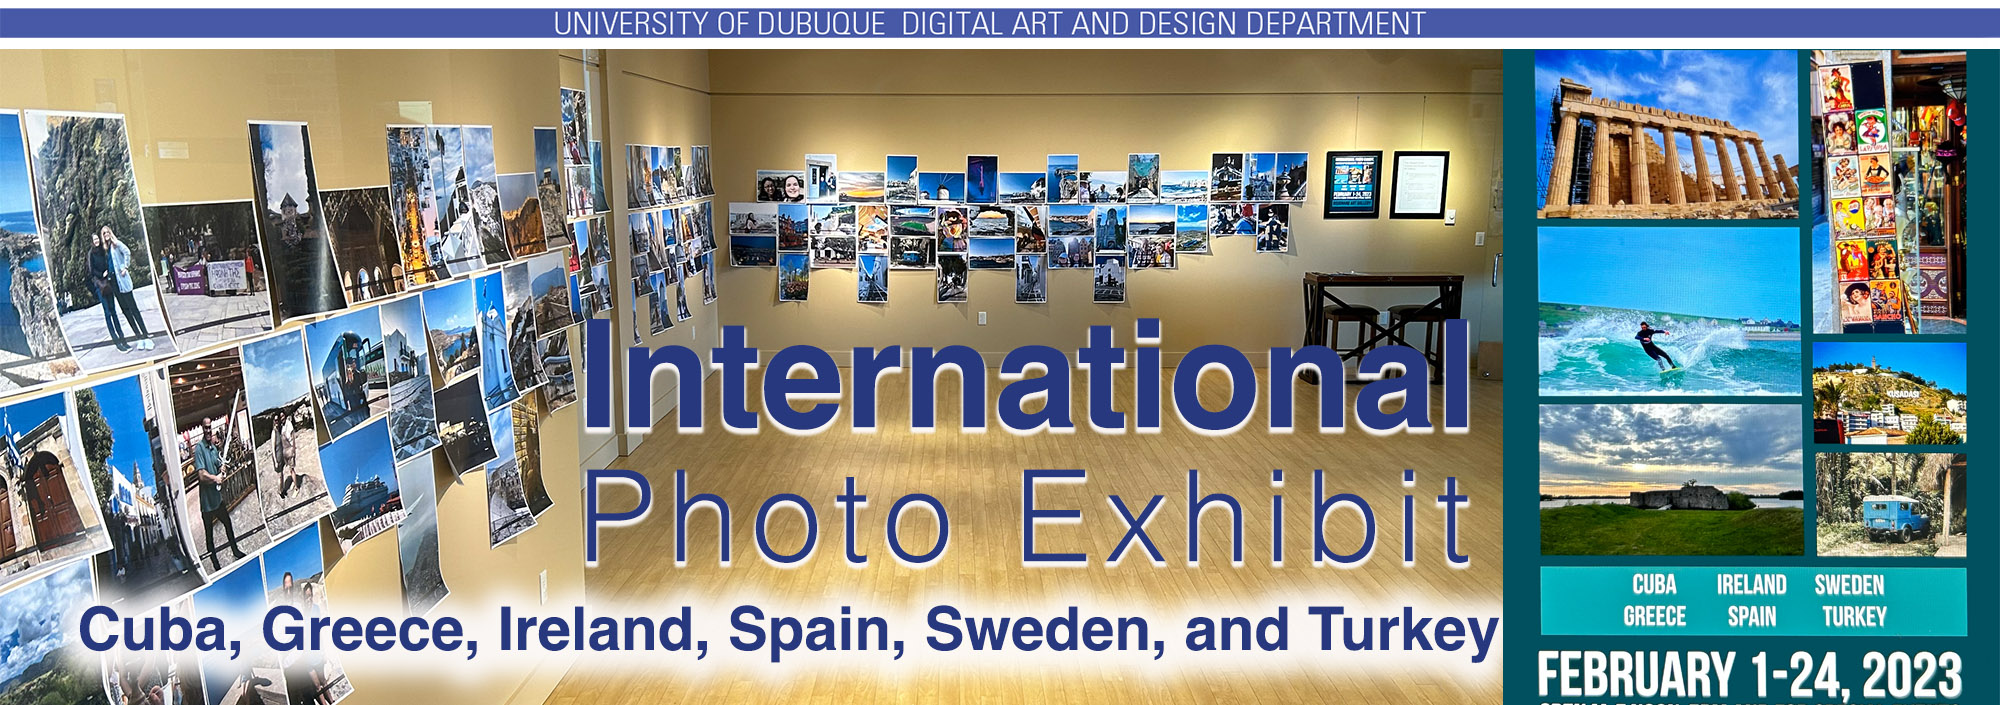 International Photo Exhibit